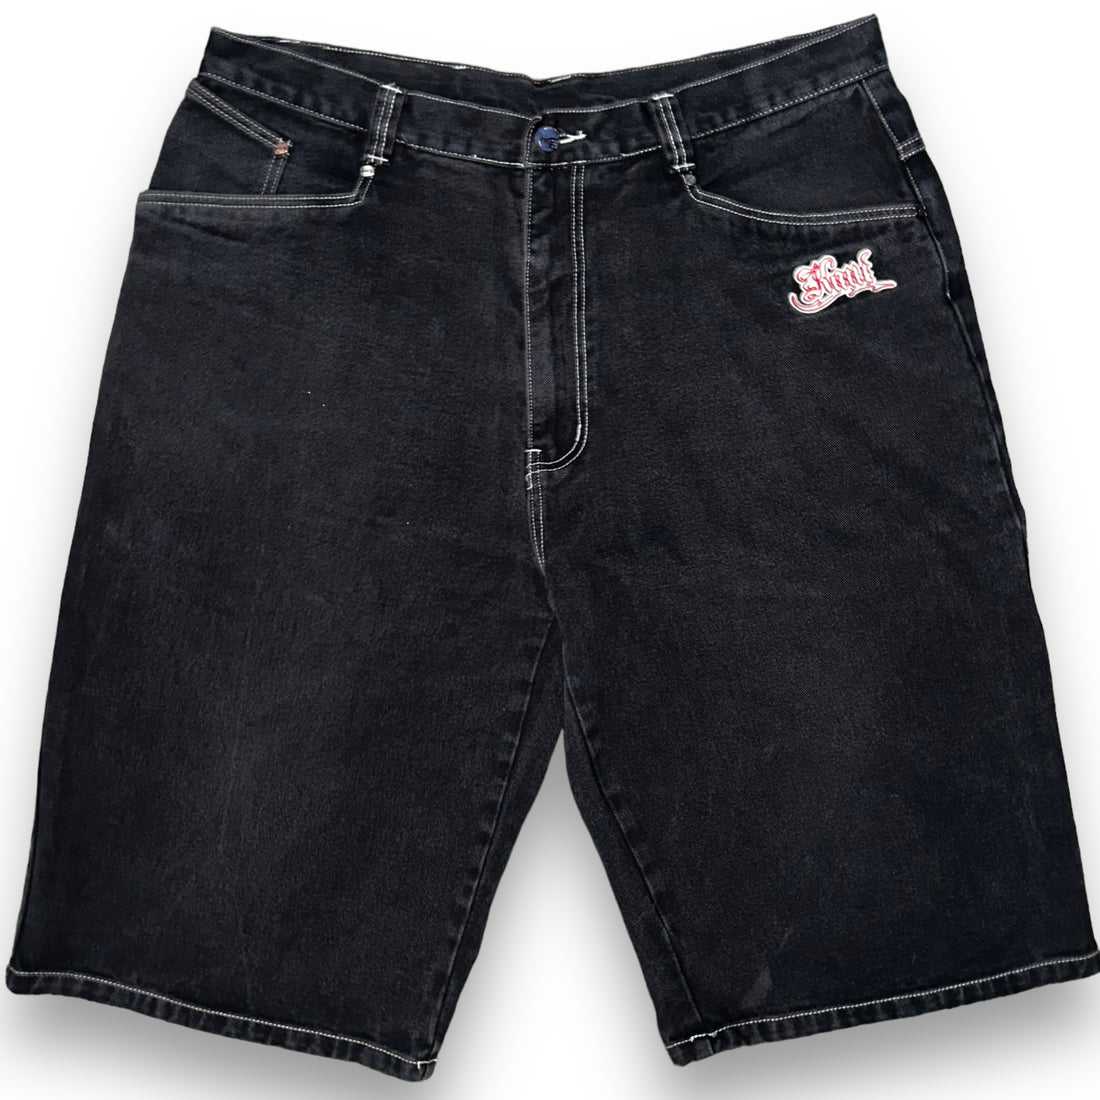 Karl Kani Citywear Baggy Shorts (38 US XXL)